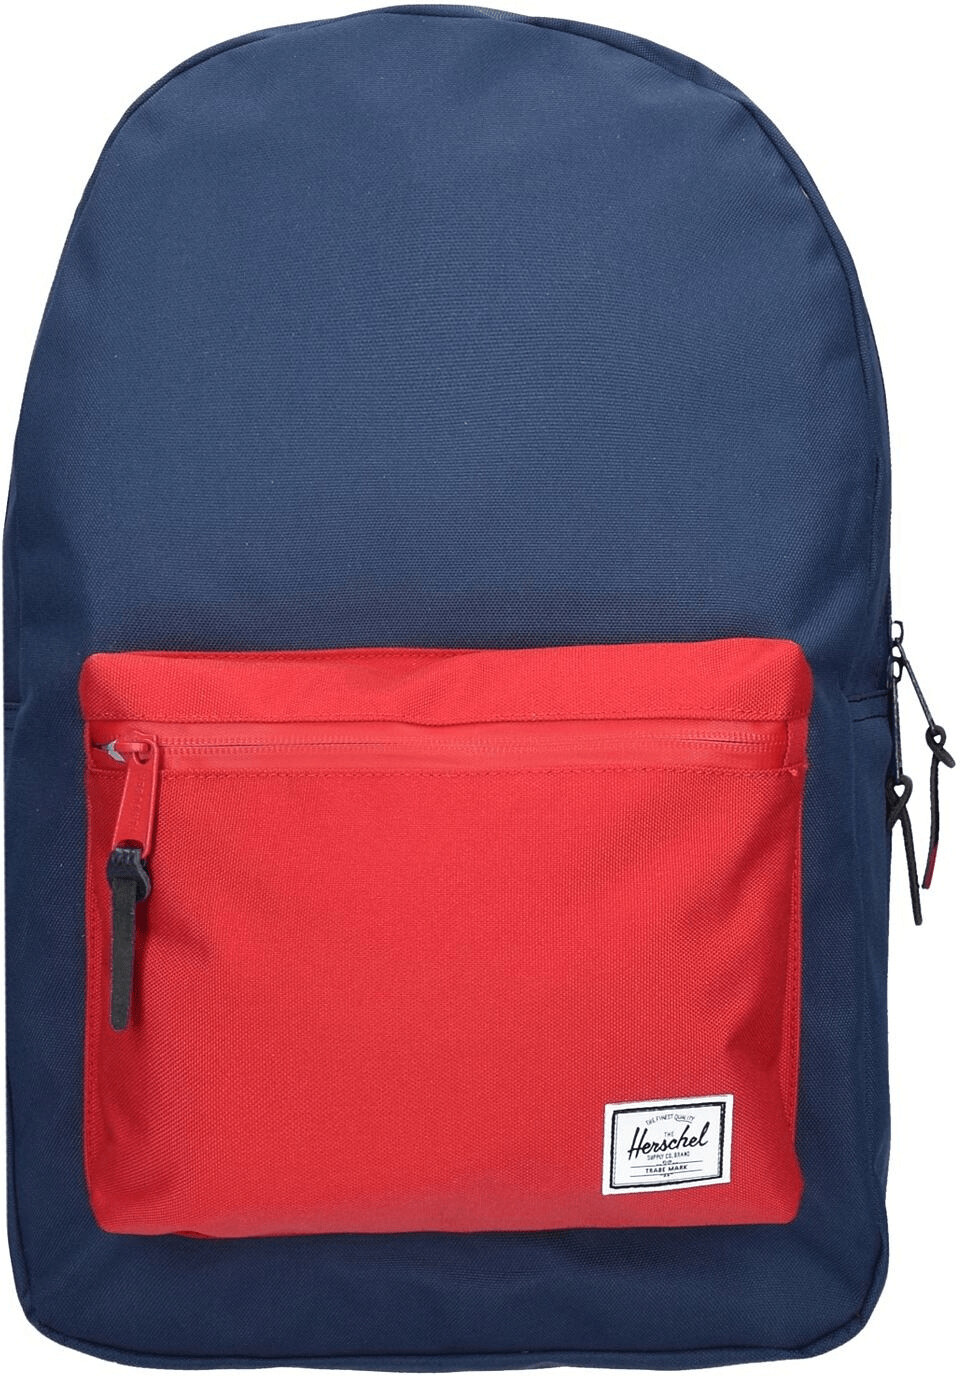 Herschel Settlement Backpack navy/red/red (01220)